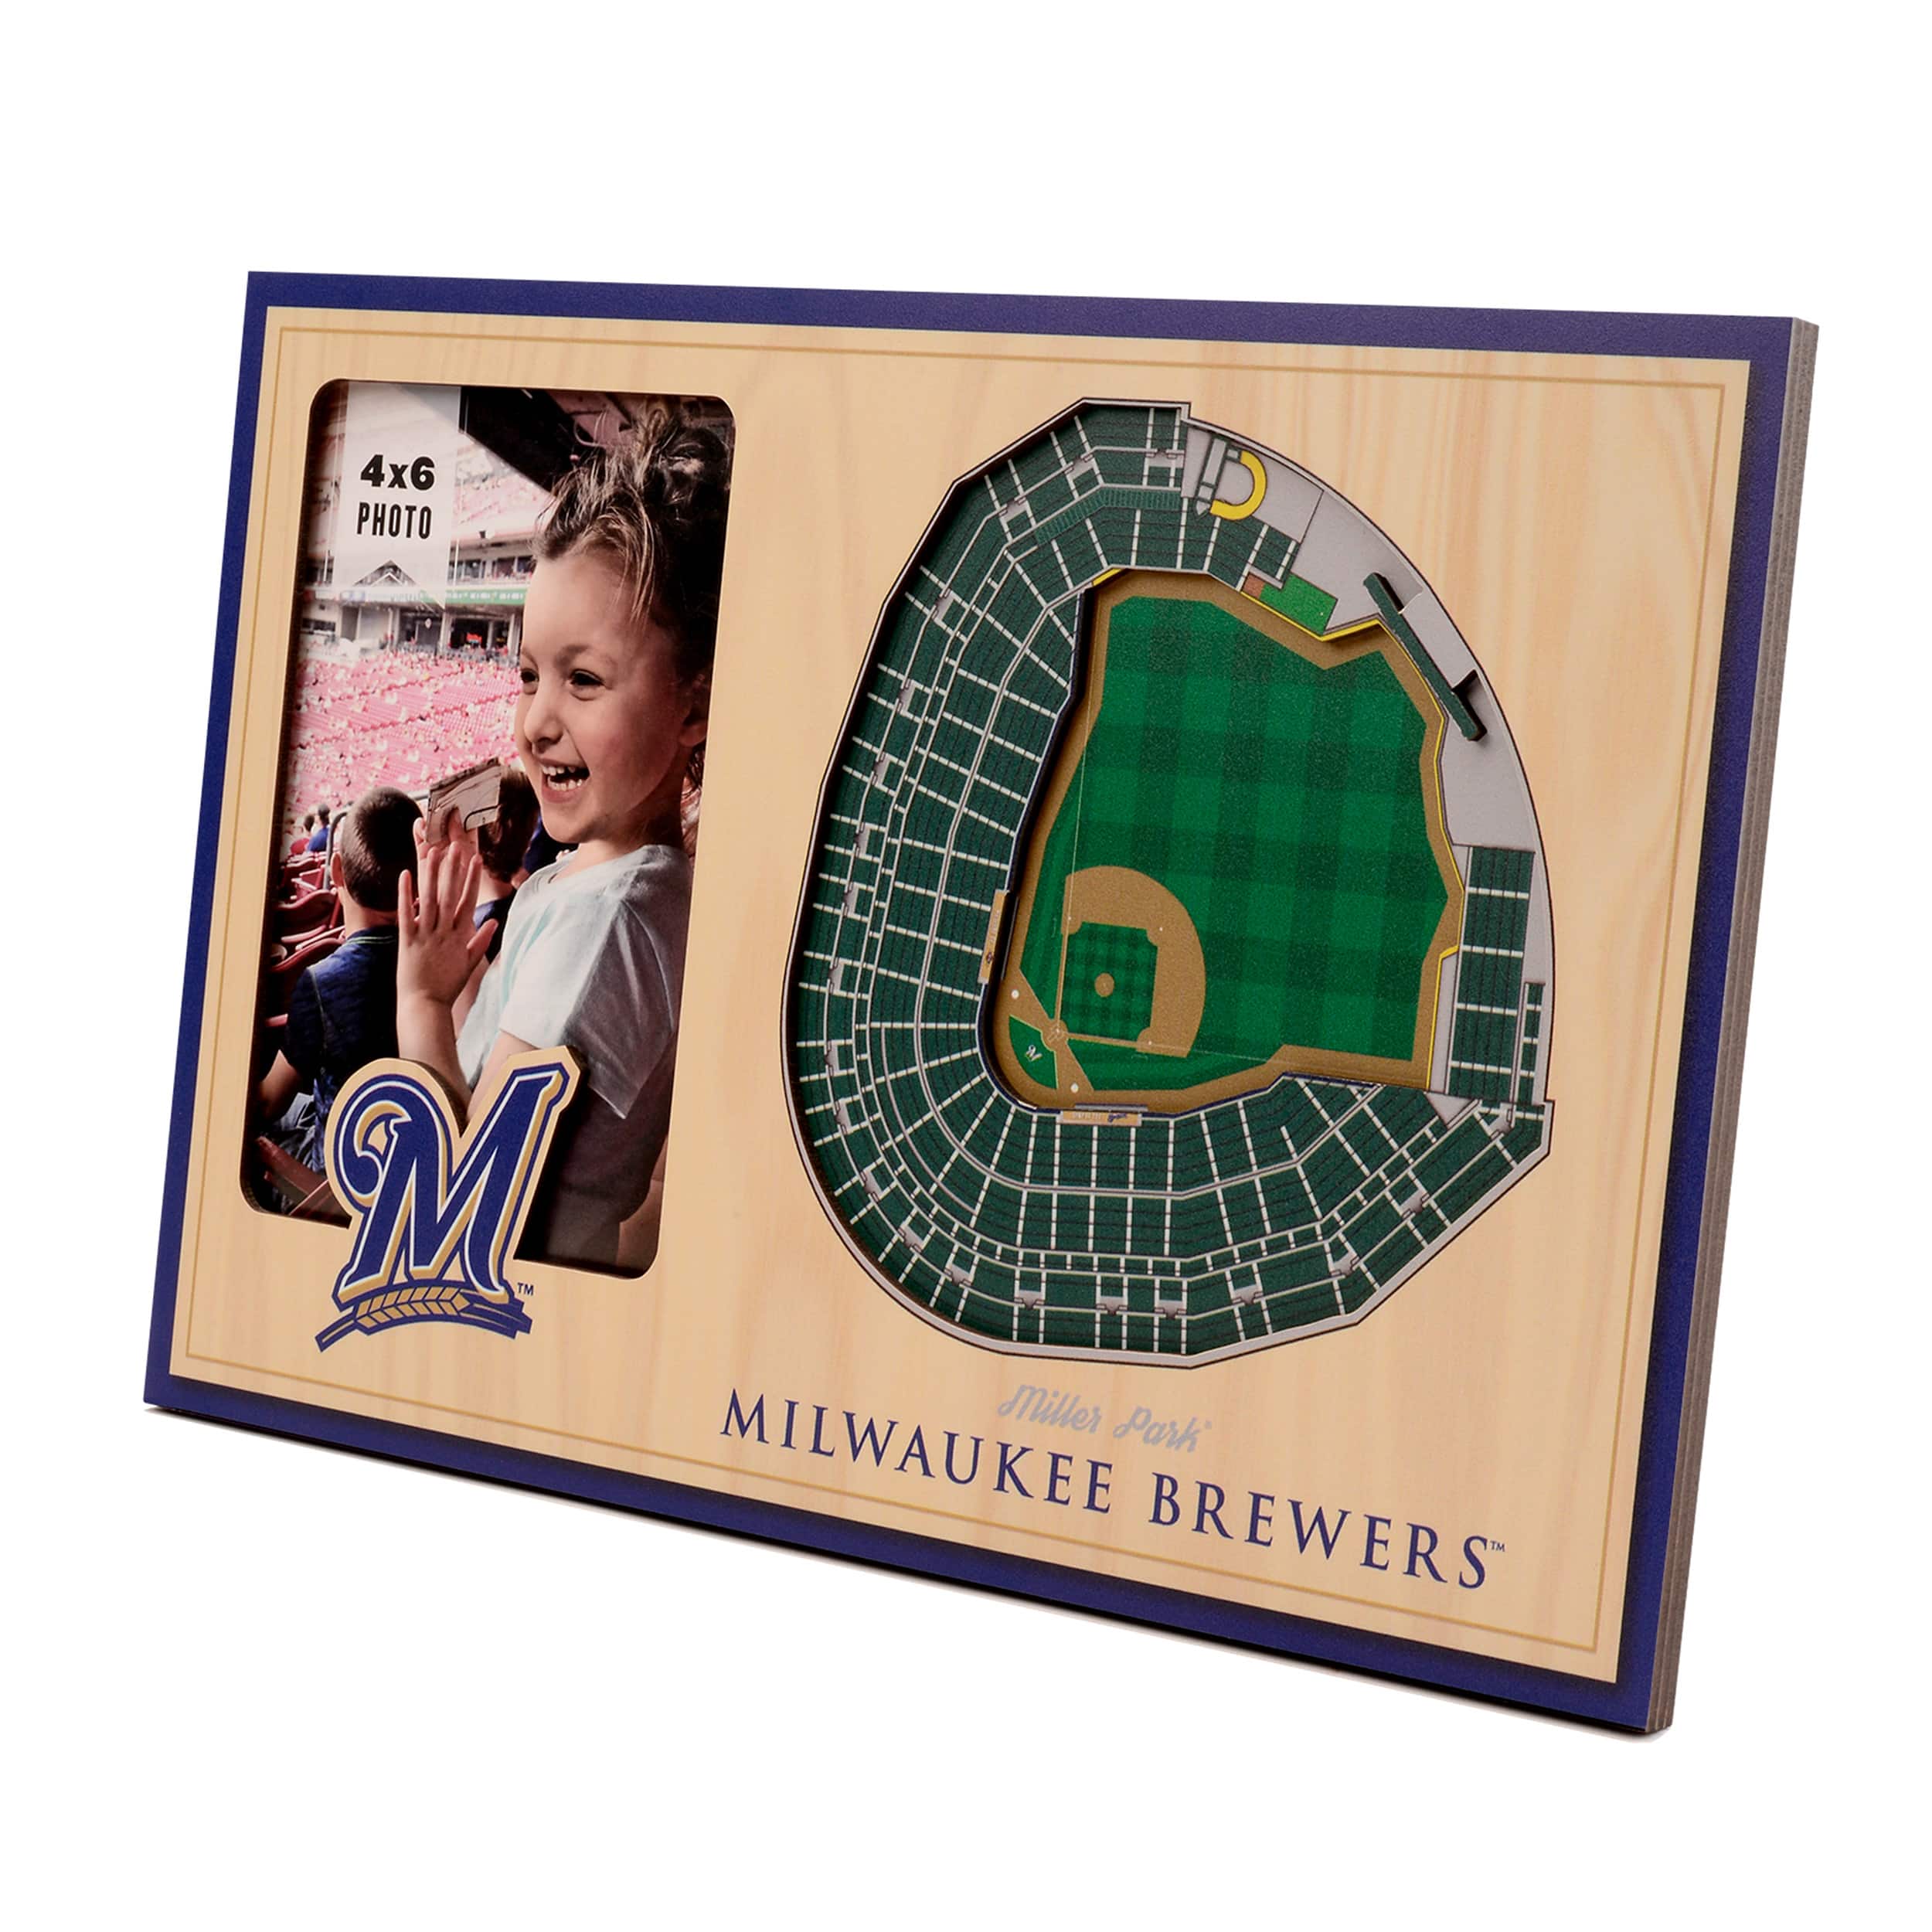 Milwaukee Brewers Special Hello Kitty Design Baseball Jersey